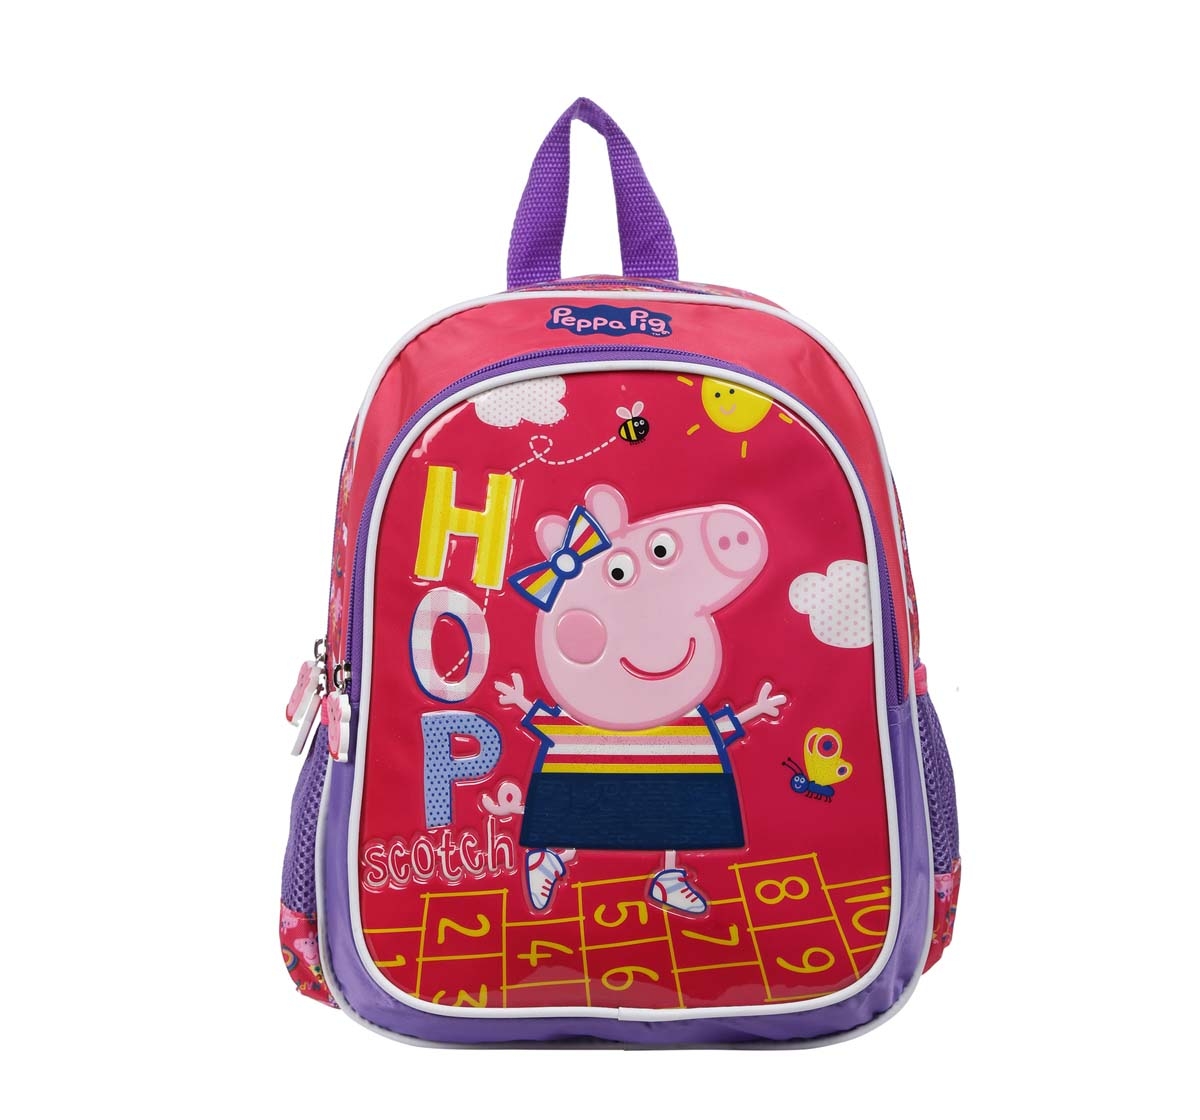 Peppa Pig | Peppa Pig Hop Scocth 12 Backpack Bags for Kids age 3Y+ 